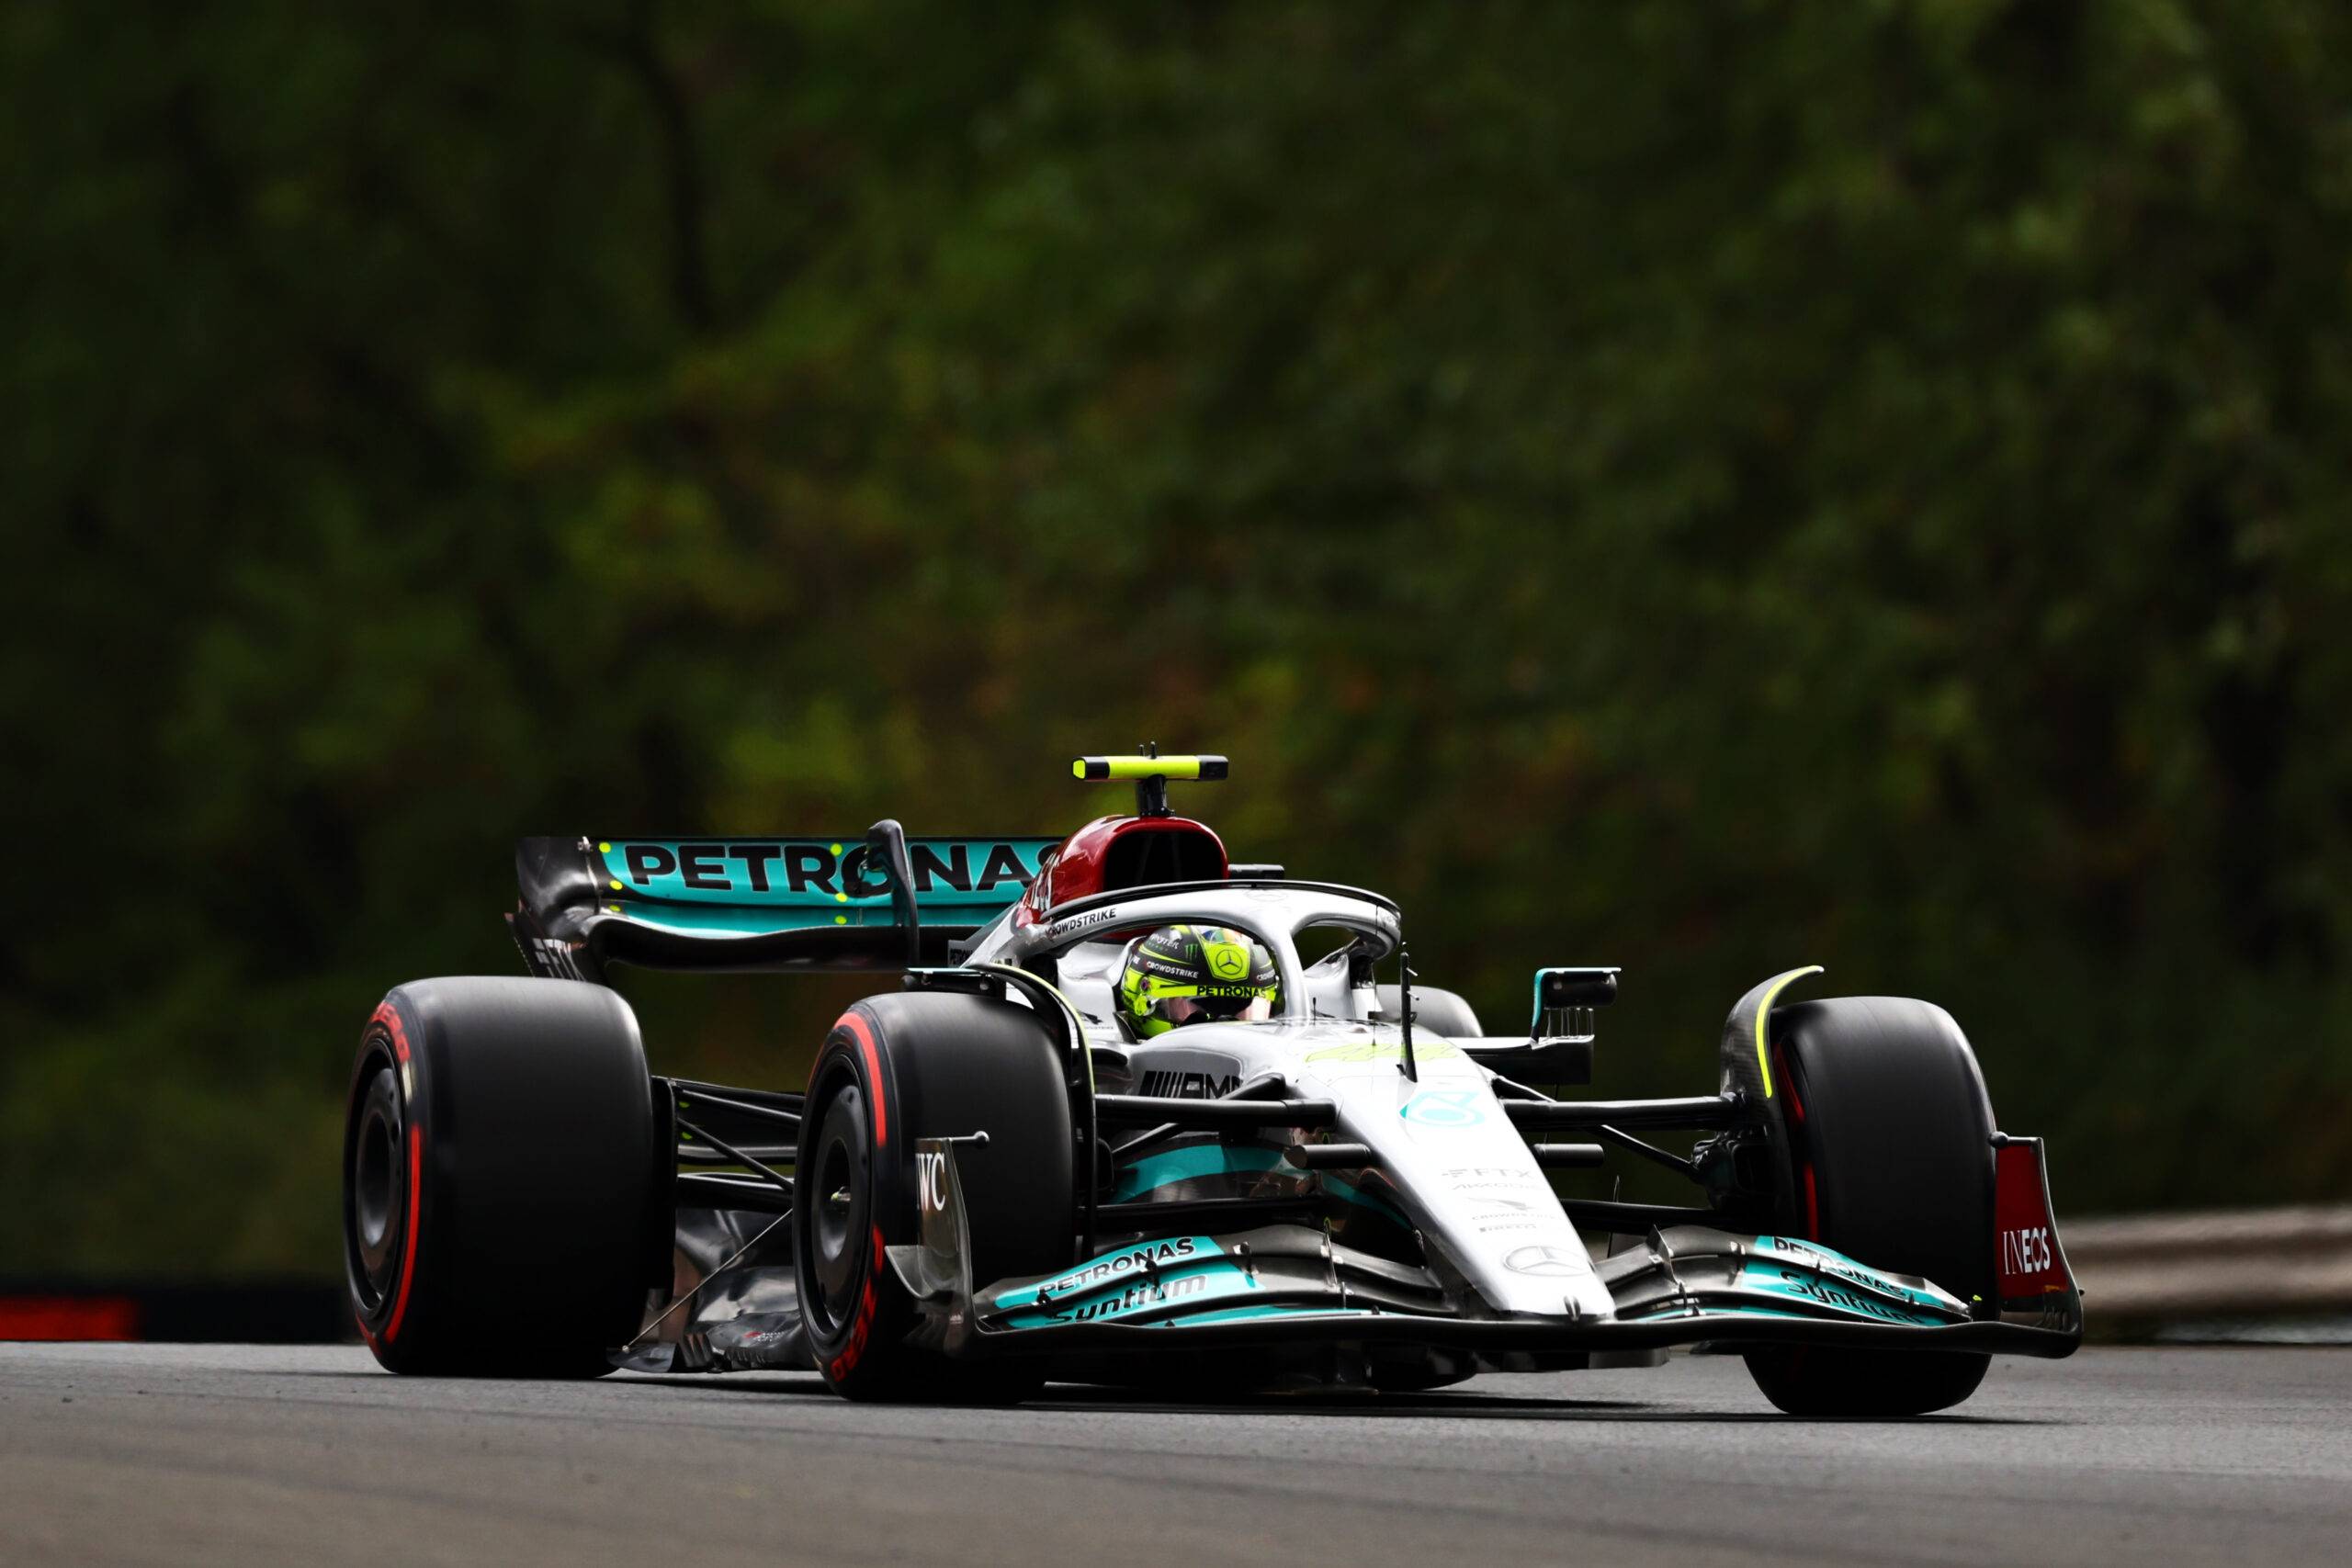 Lewis Hamilton drives the Mercedes